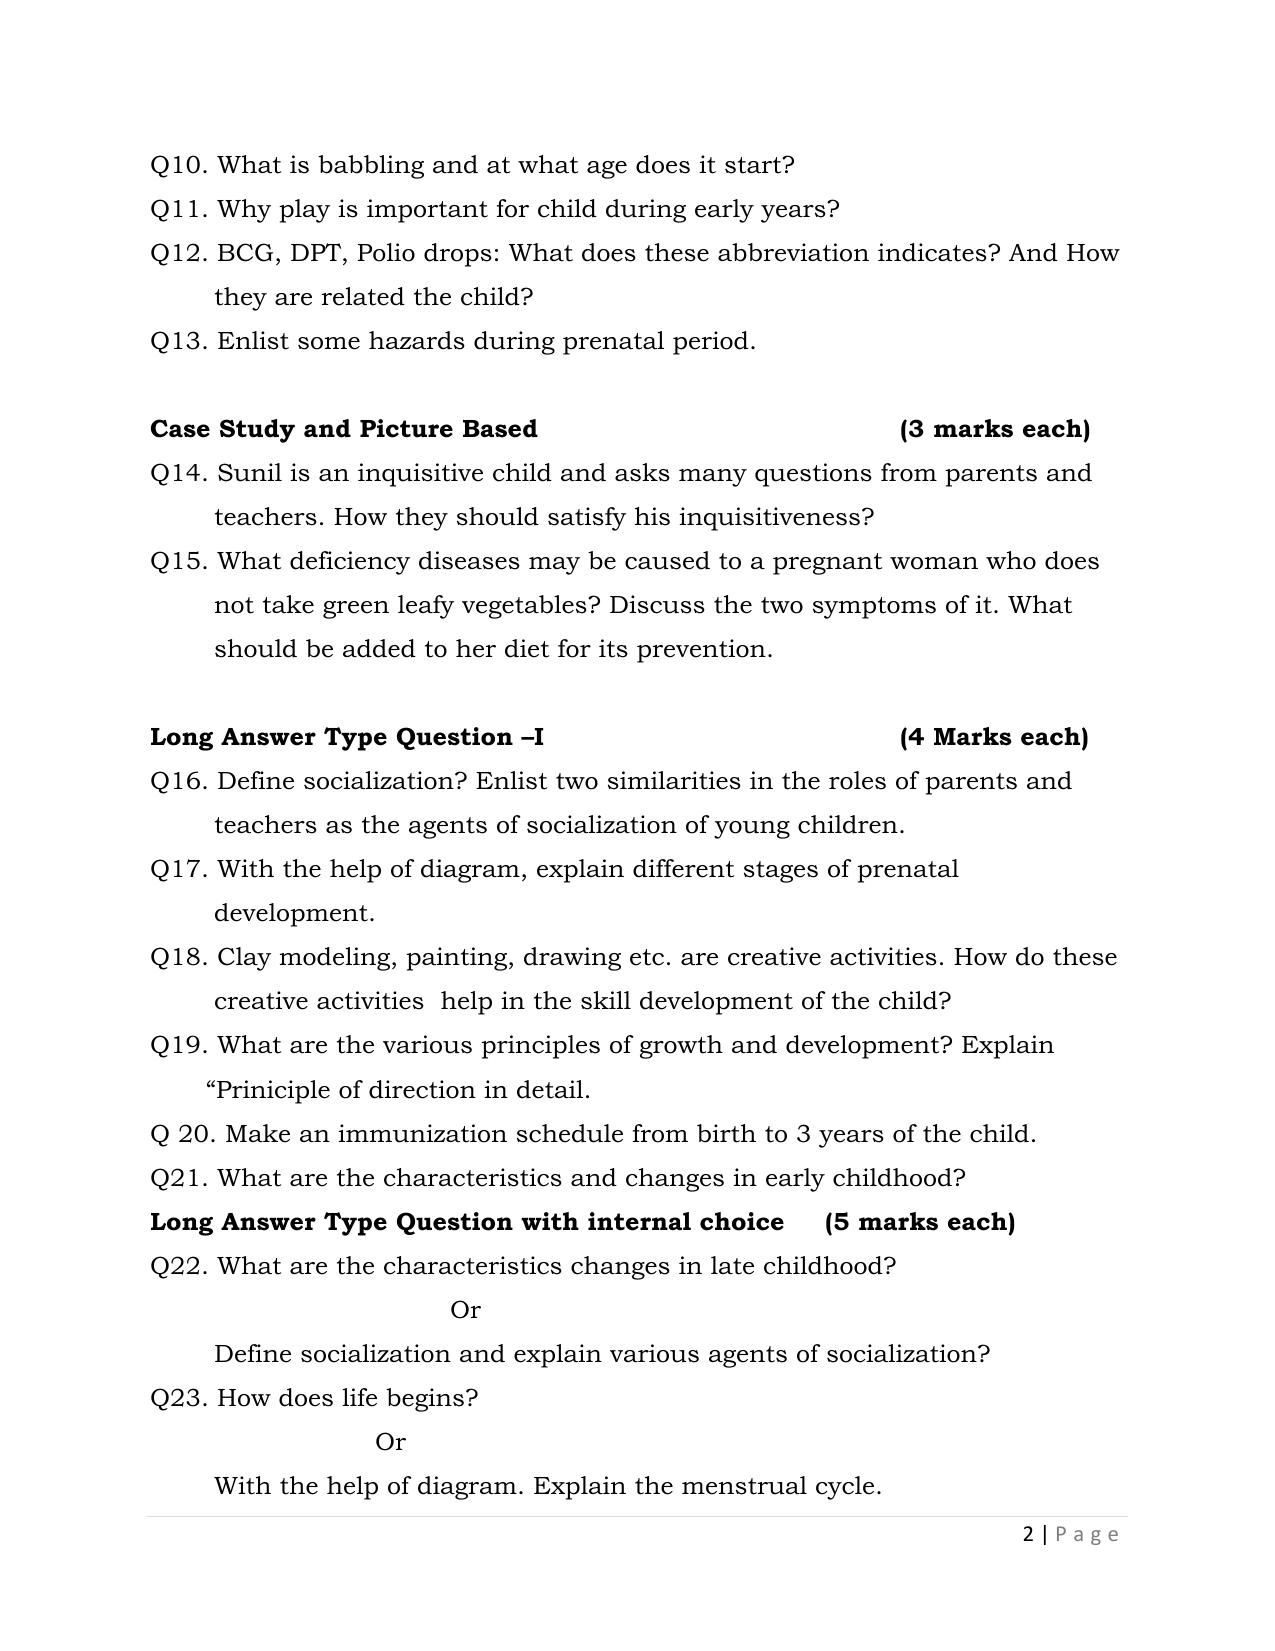 JKBOSE Class 12 Human Development Model Question Paper - Page 2